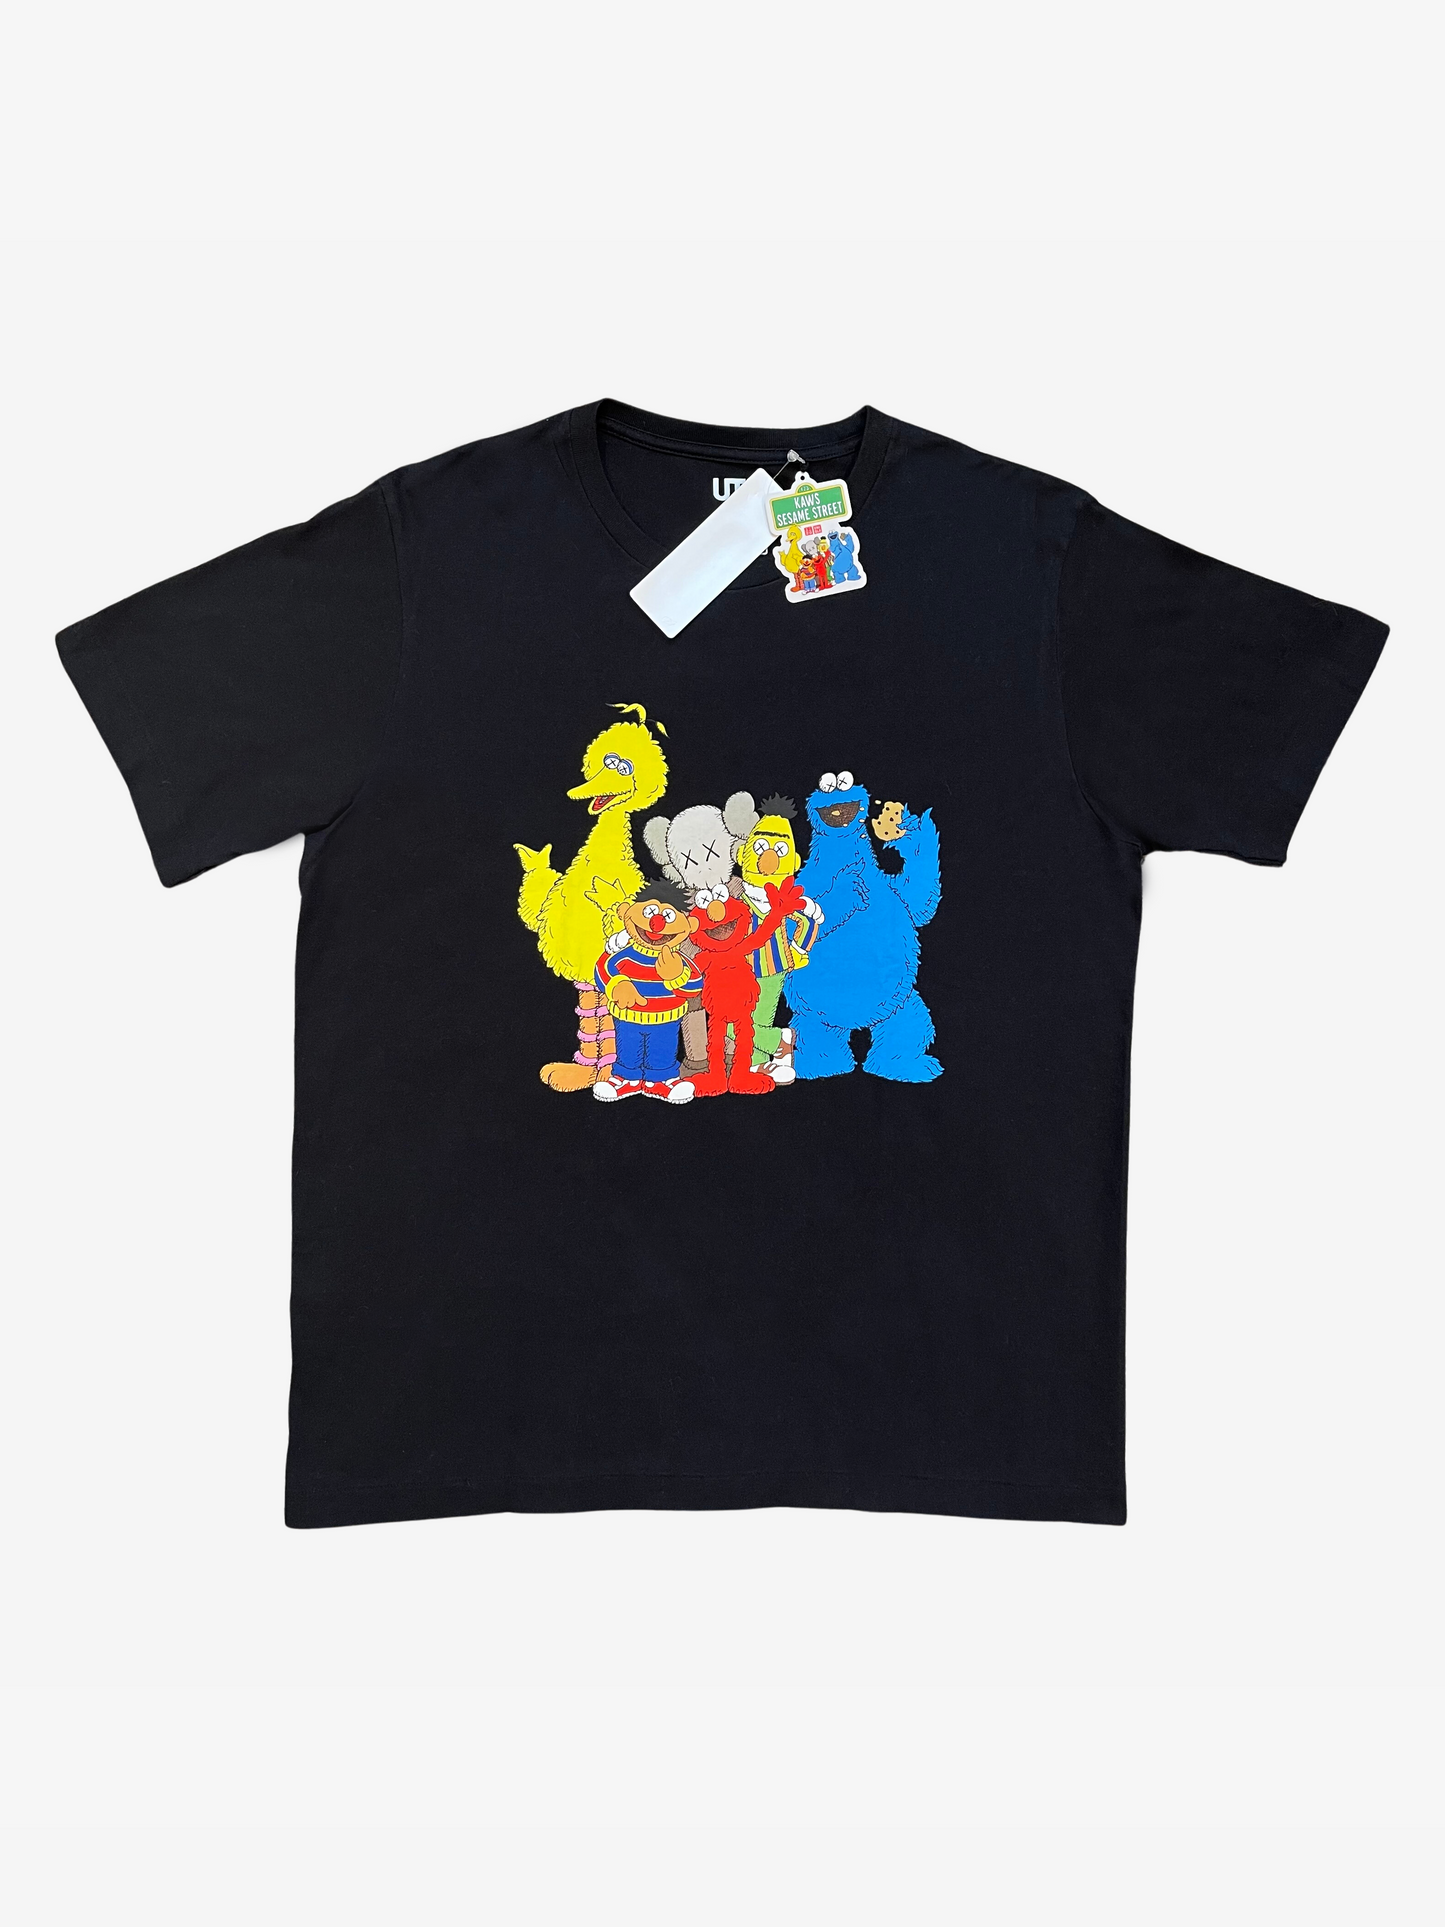 x Uniqlo x Sesame Street Black Group #2 T-Shirt